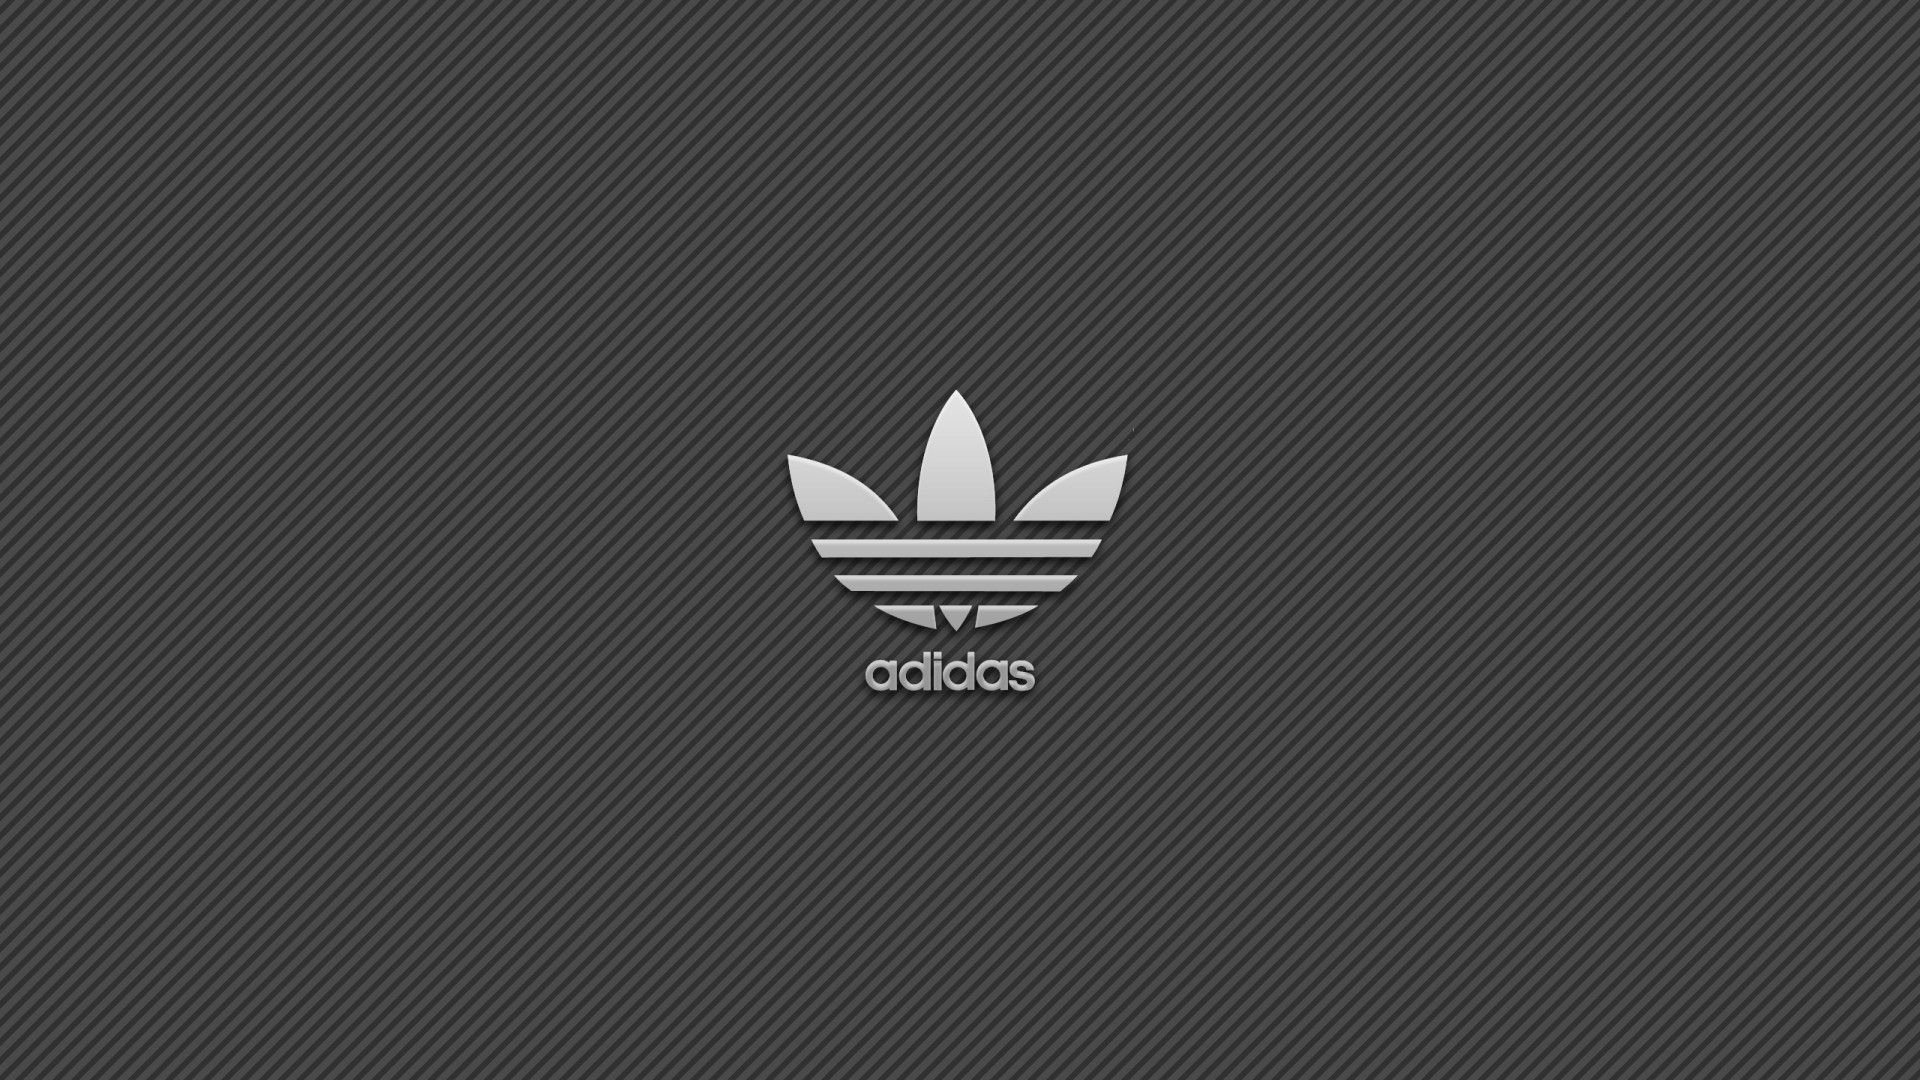 Adidas Wallpaper 